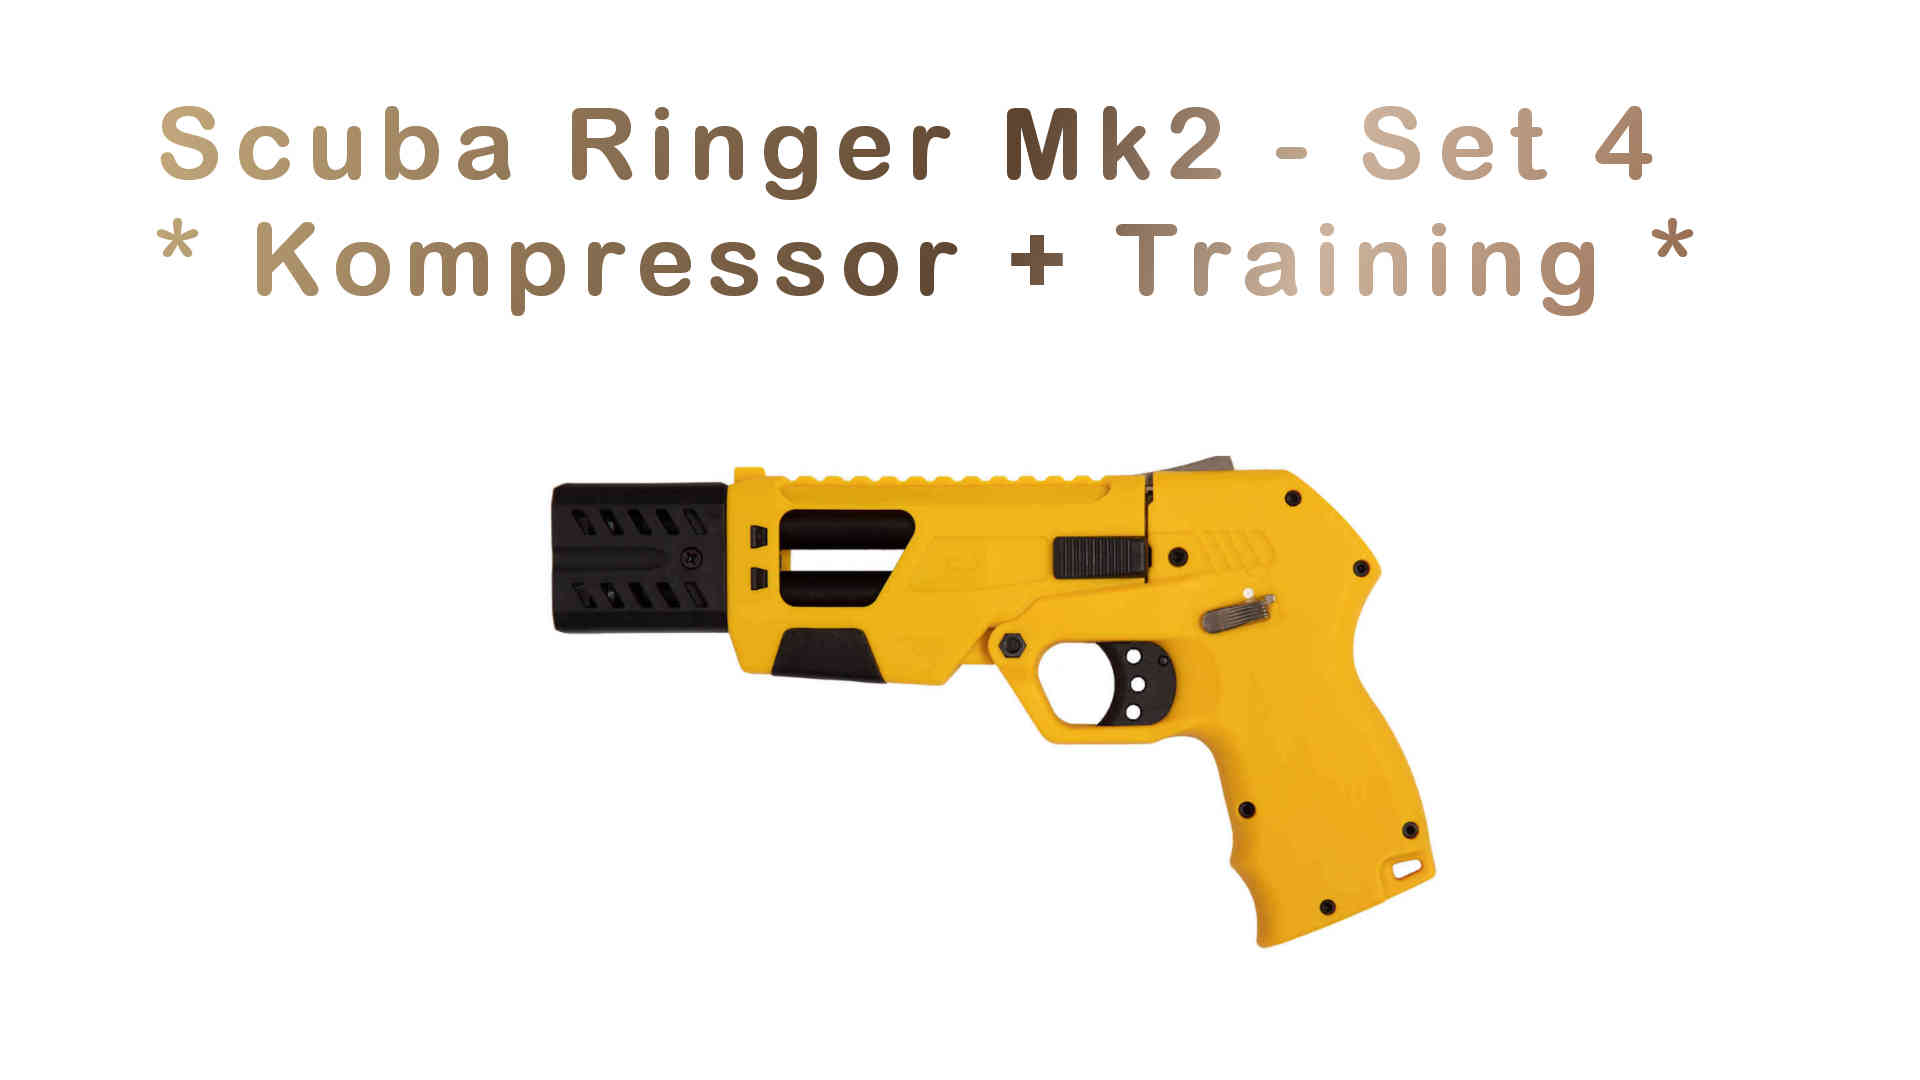 Scuba Ringer MK2 - Set 4 - Kompressor + Training